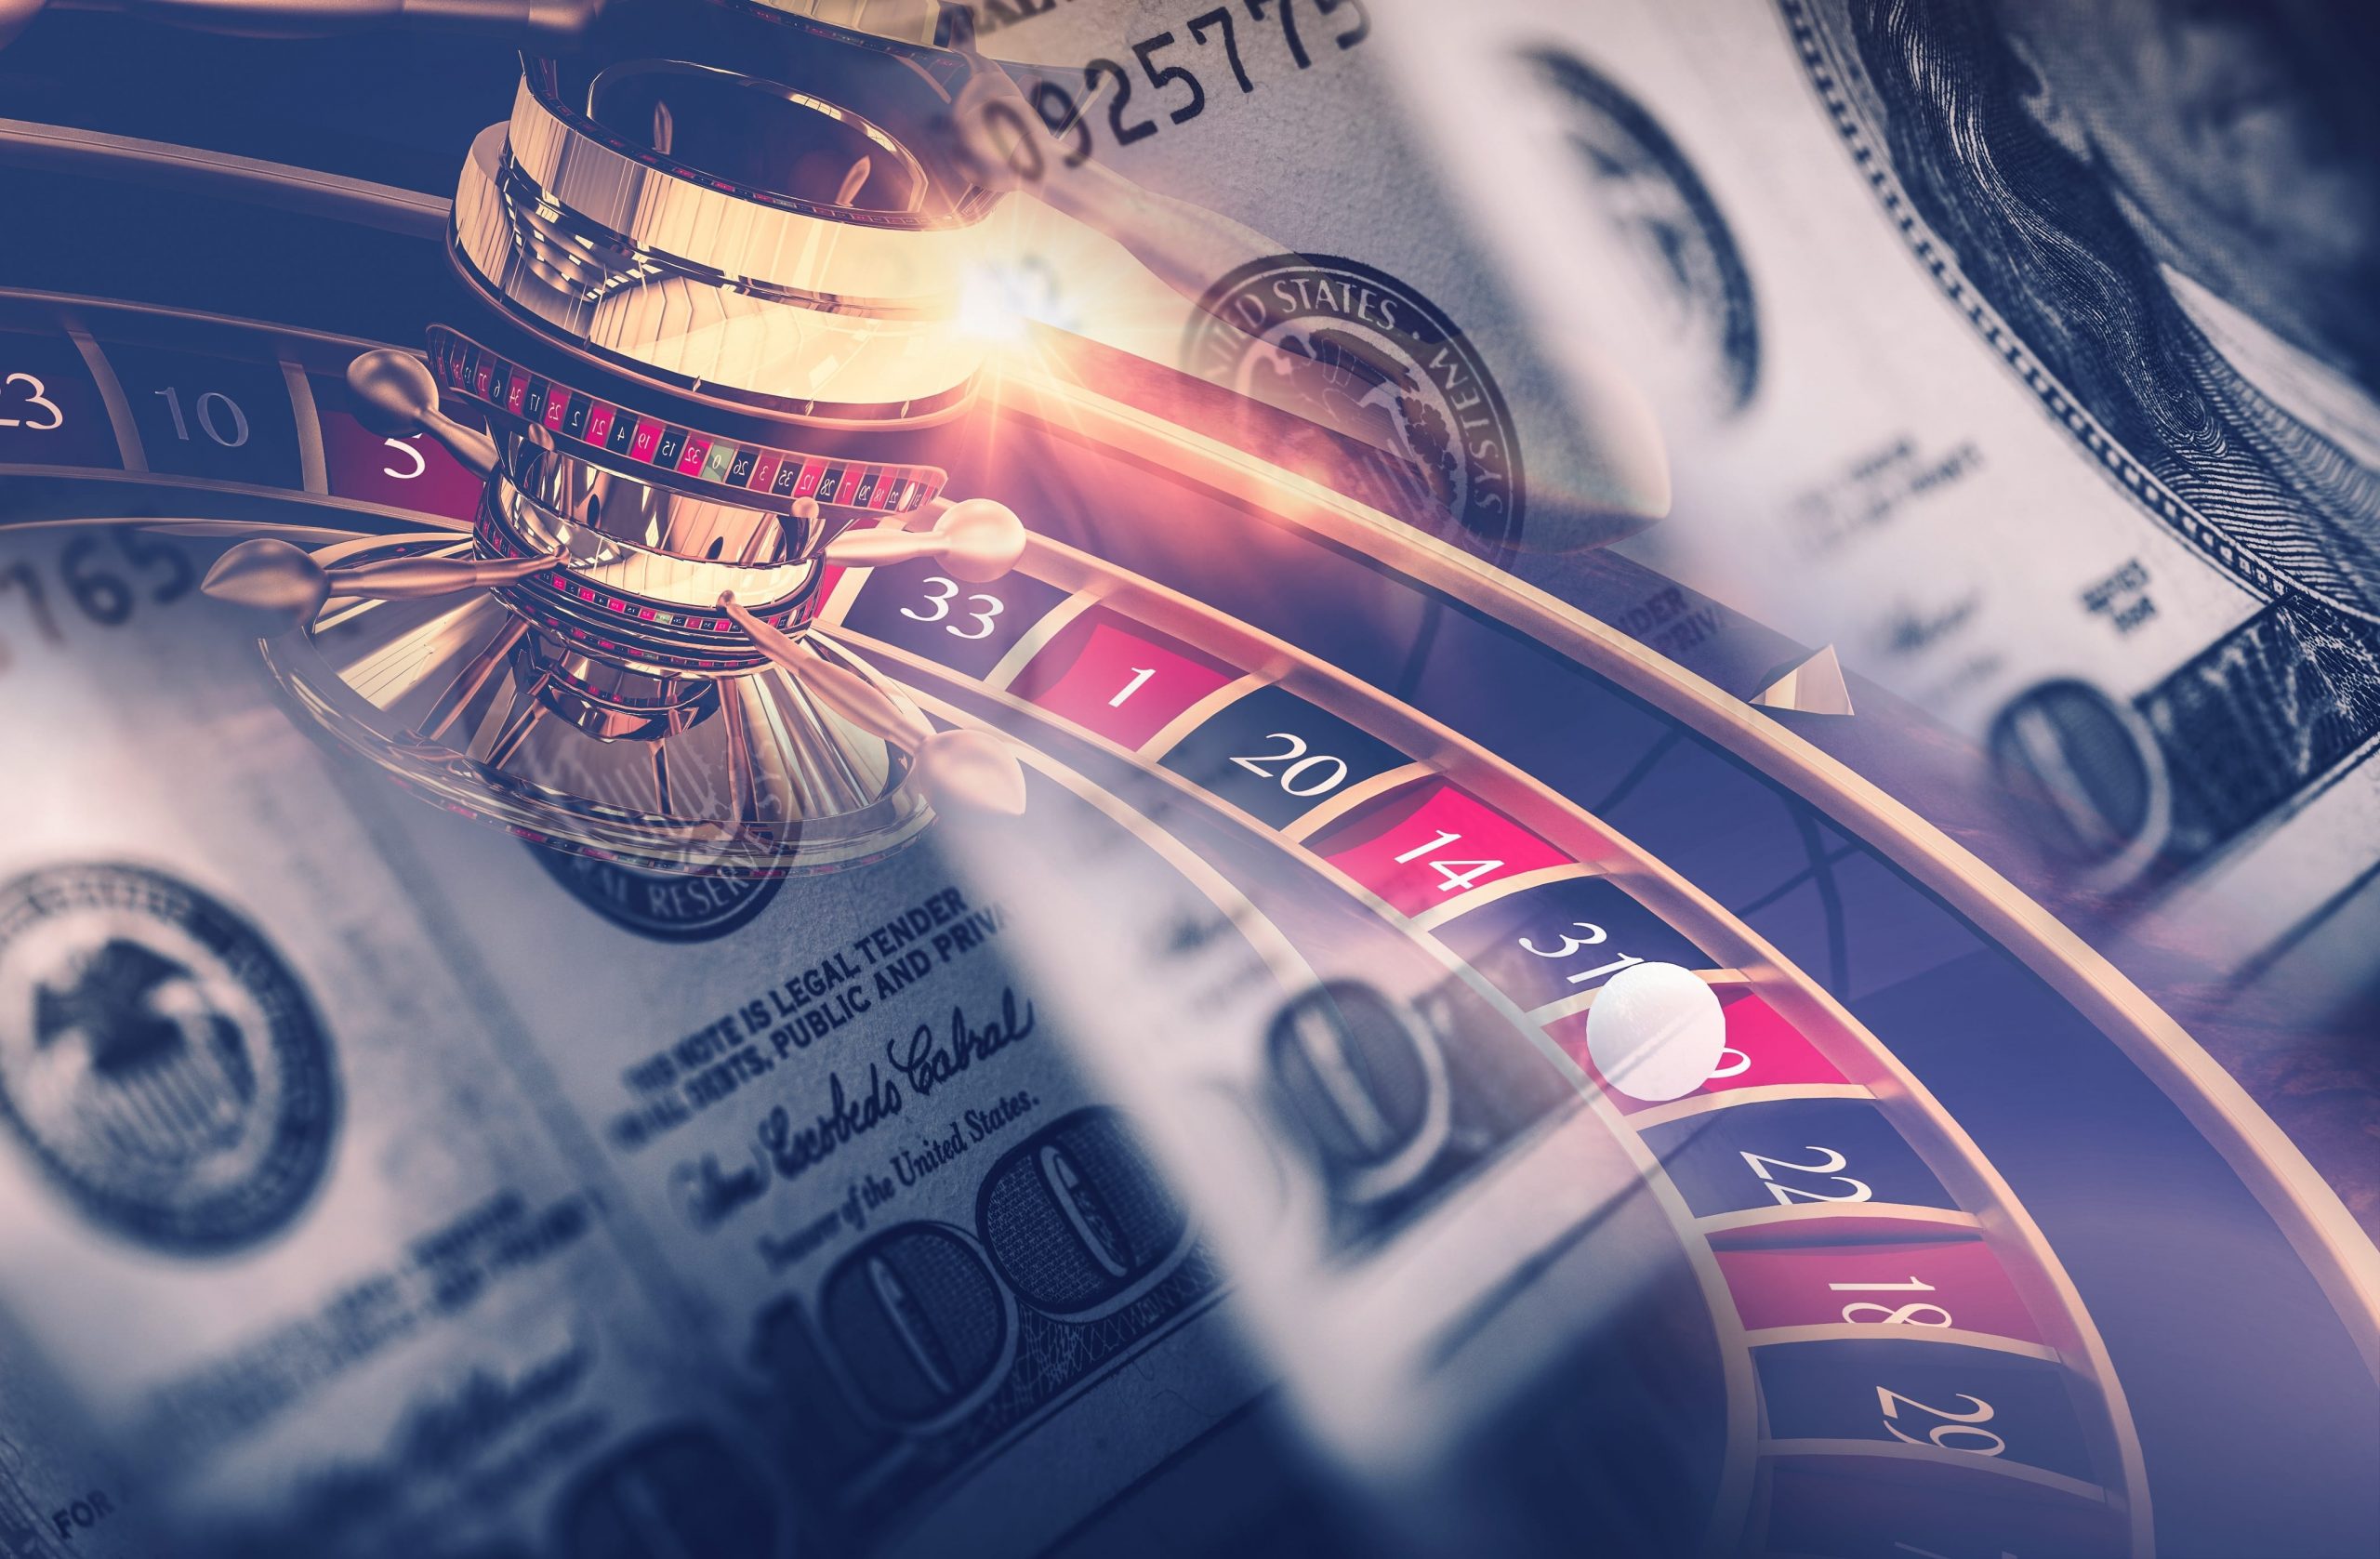 paying taxes on casino winnings